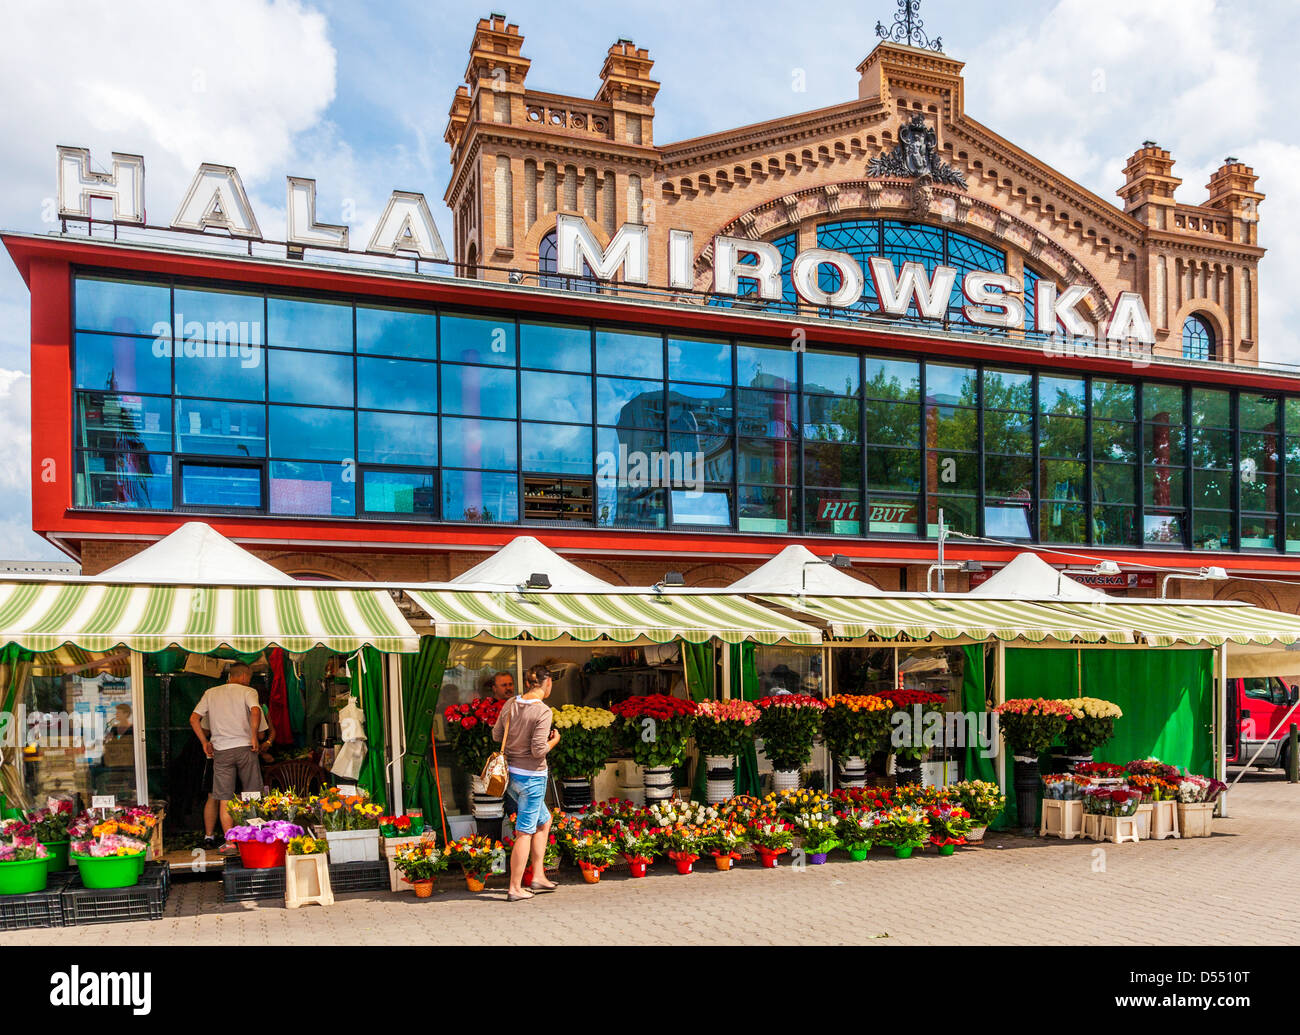 Flower stalls outside Hala Mirowska market in Warsaw, Poland. Stock Photo